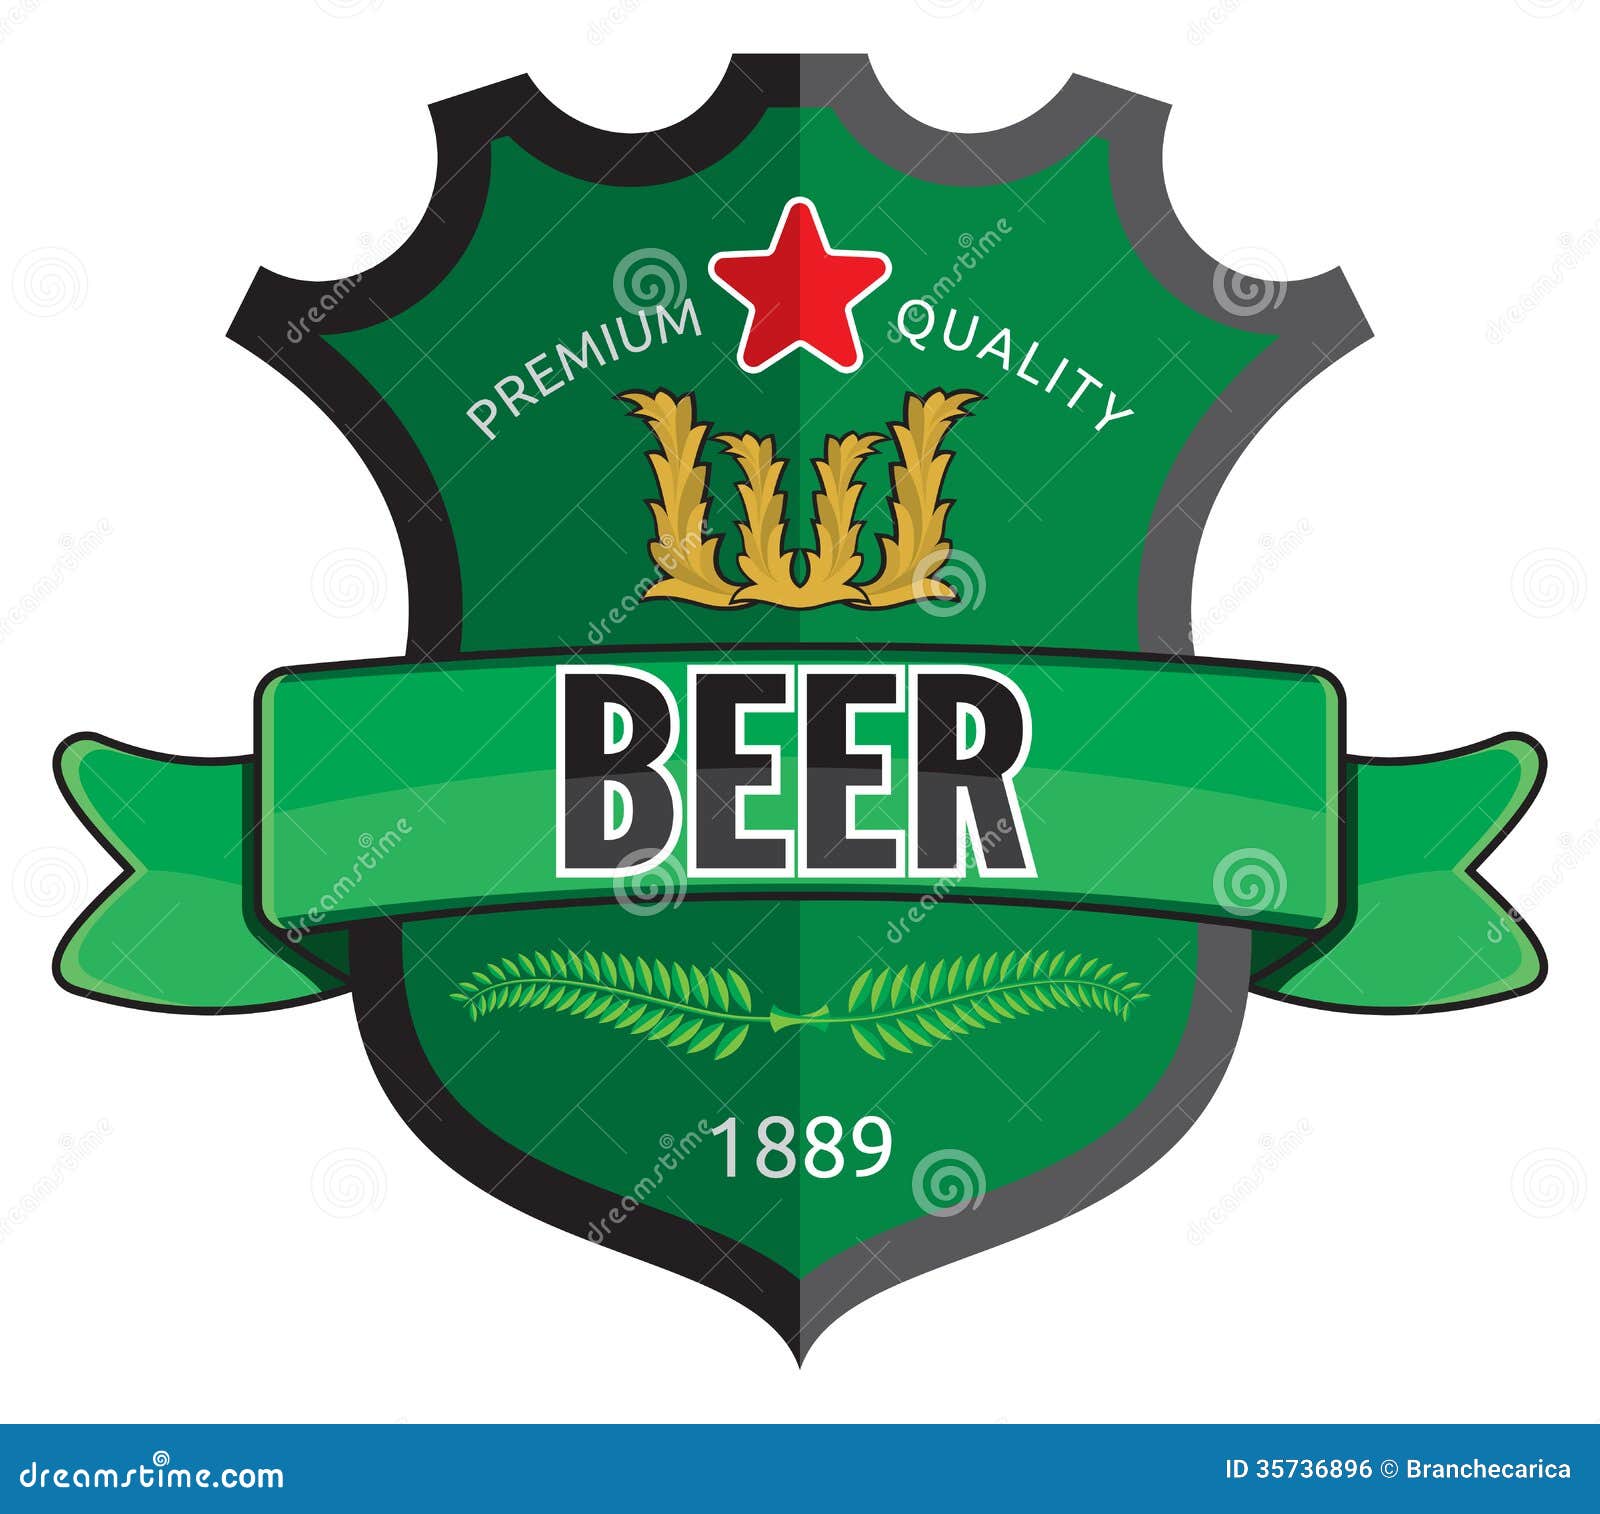 Beer label design stock vector. Illustration of draft - 35736896